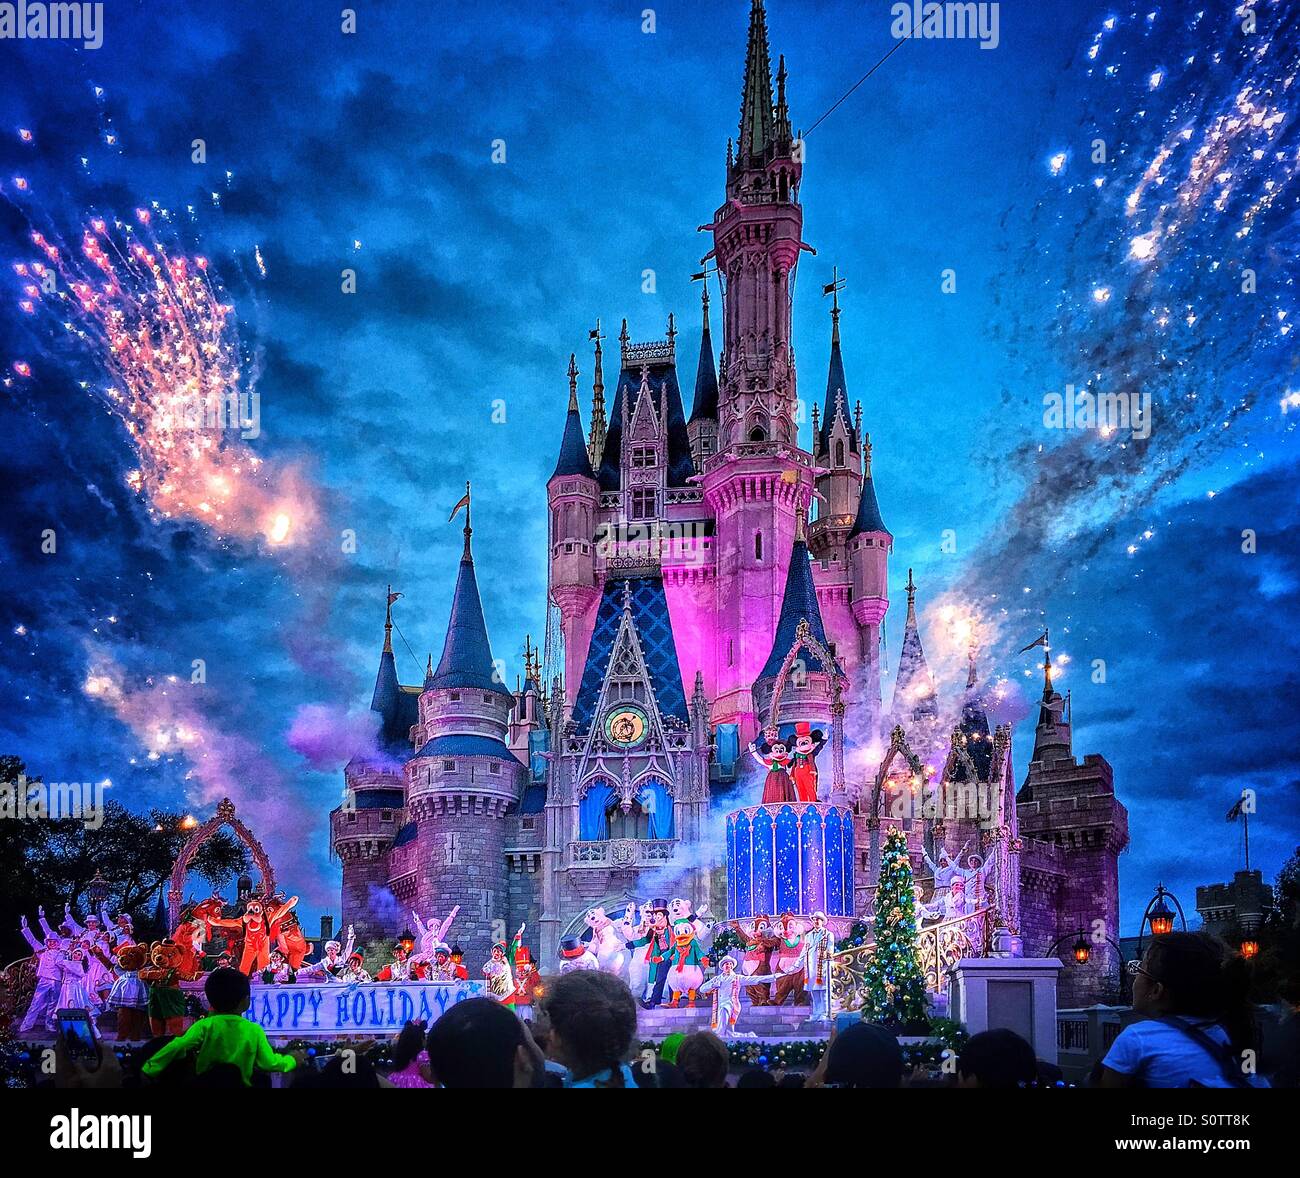 Immagini Natalizie Walt Disney.Walt Disney World Vacanze Di Natale Live Show Davanti Al Castello Di Cenerentola Orlando Florida Stati Uniti D America Foto Stock Alamy